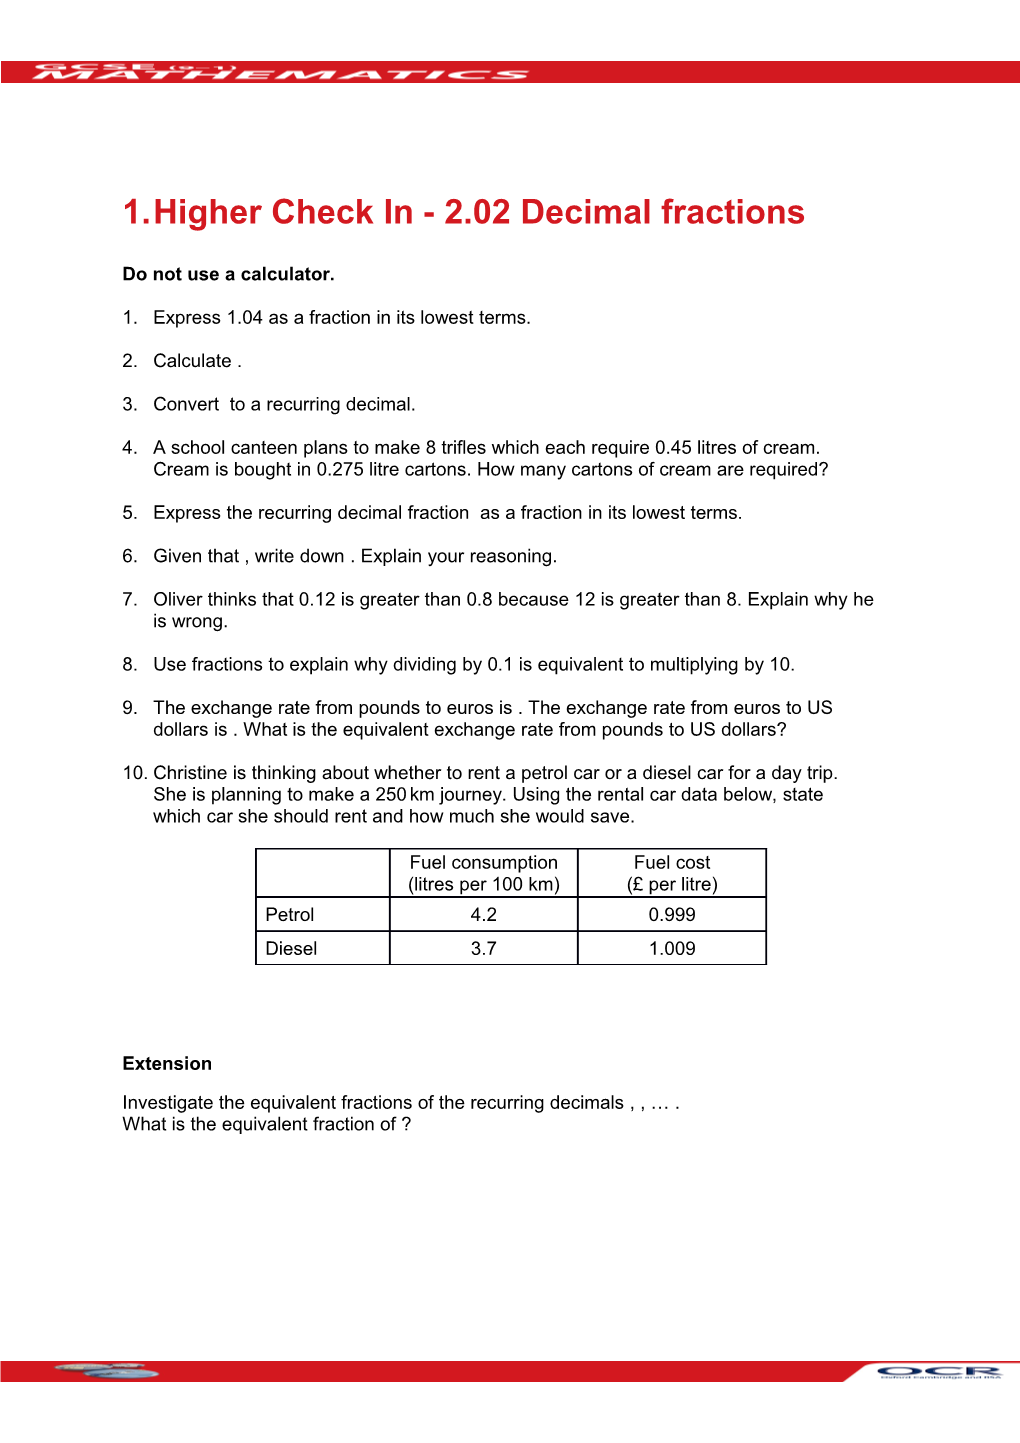 GCSE (9-1) Mathematics Higher Check in Test (2.02 Decimal Fractions)